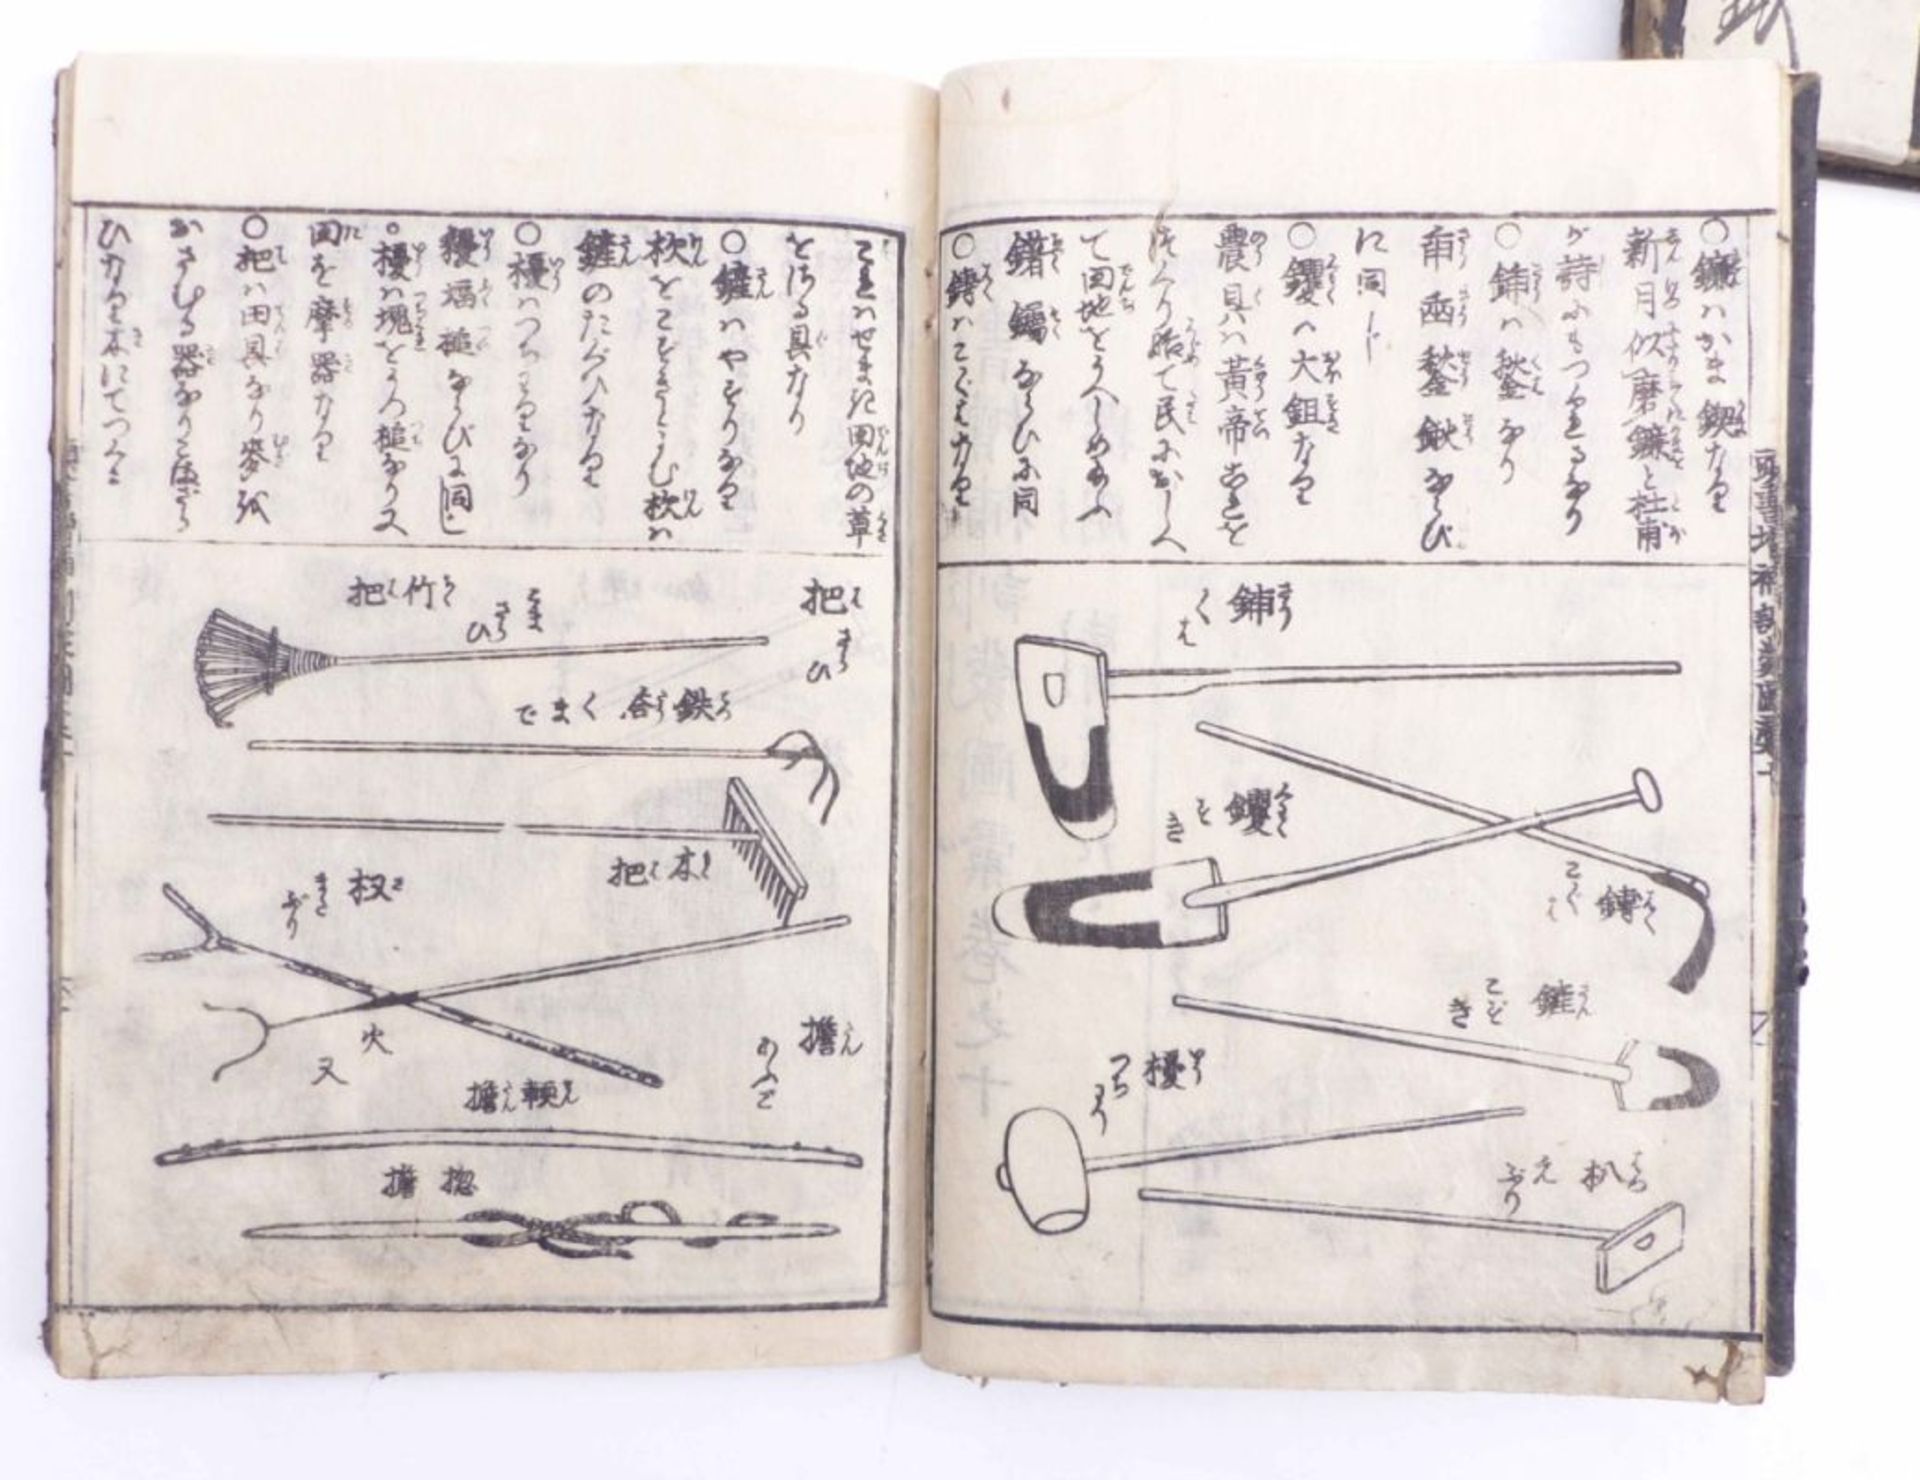 Dreibändige Enzyklopädie, Japan, 19. Jh. - Image 5 of 22